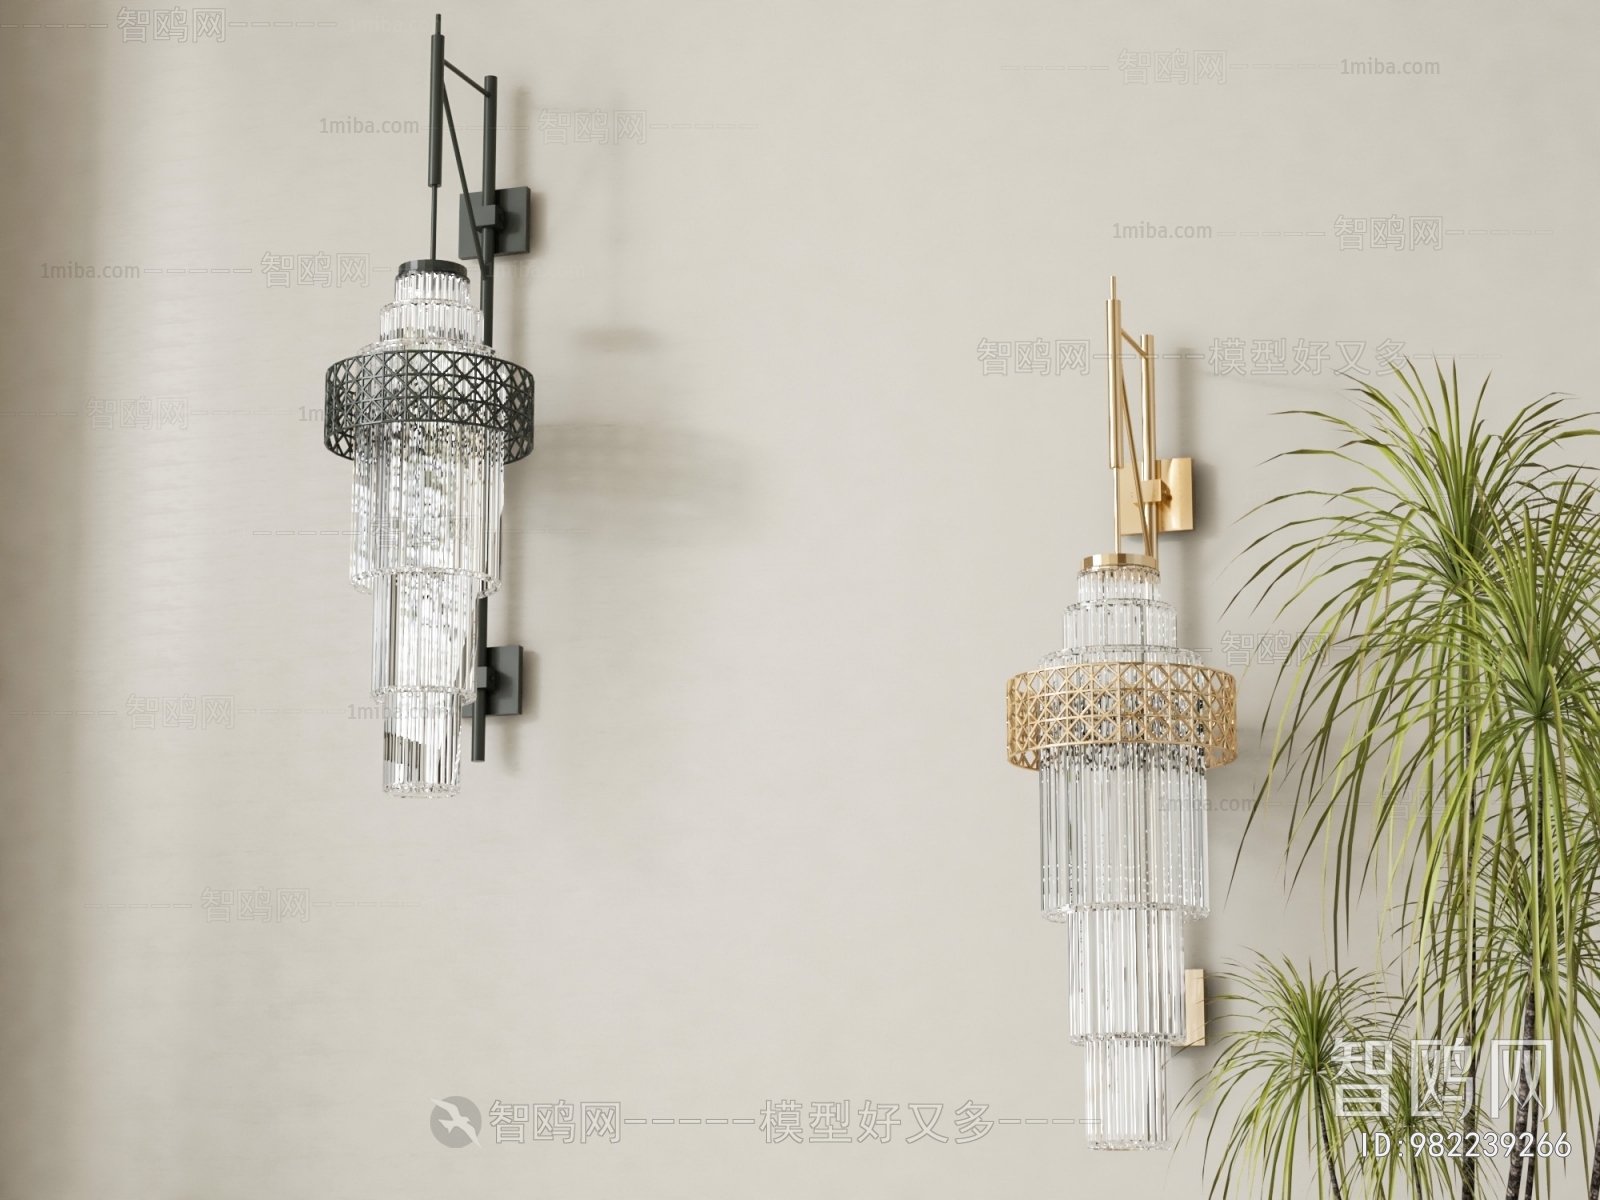 Simple European Style Wall Lamp